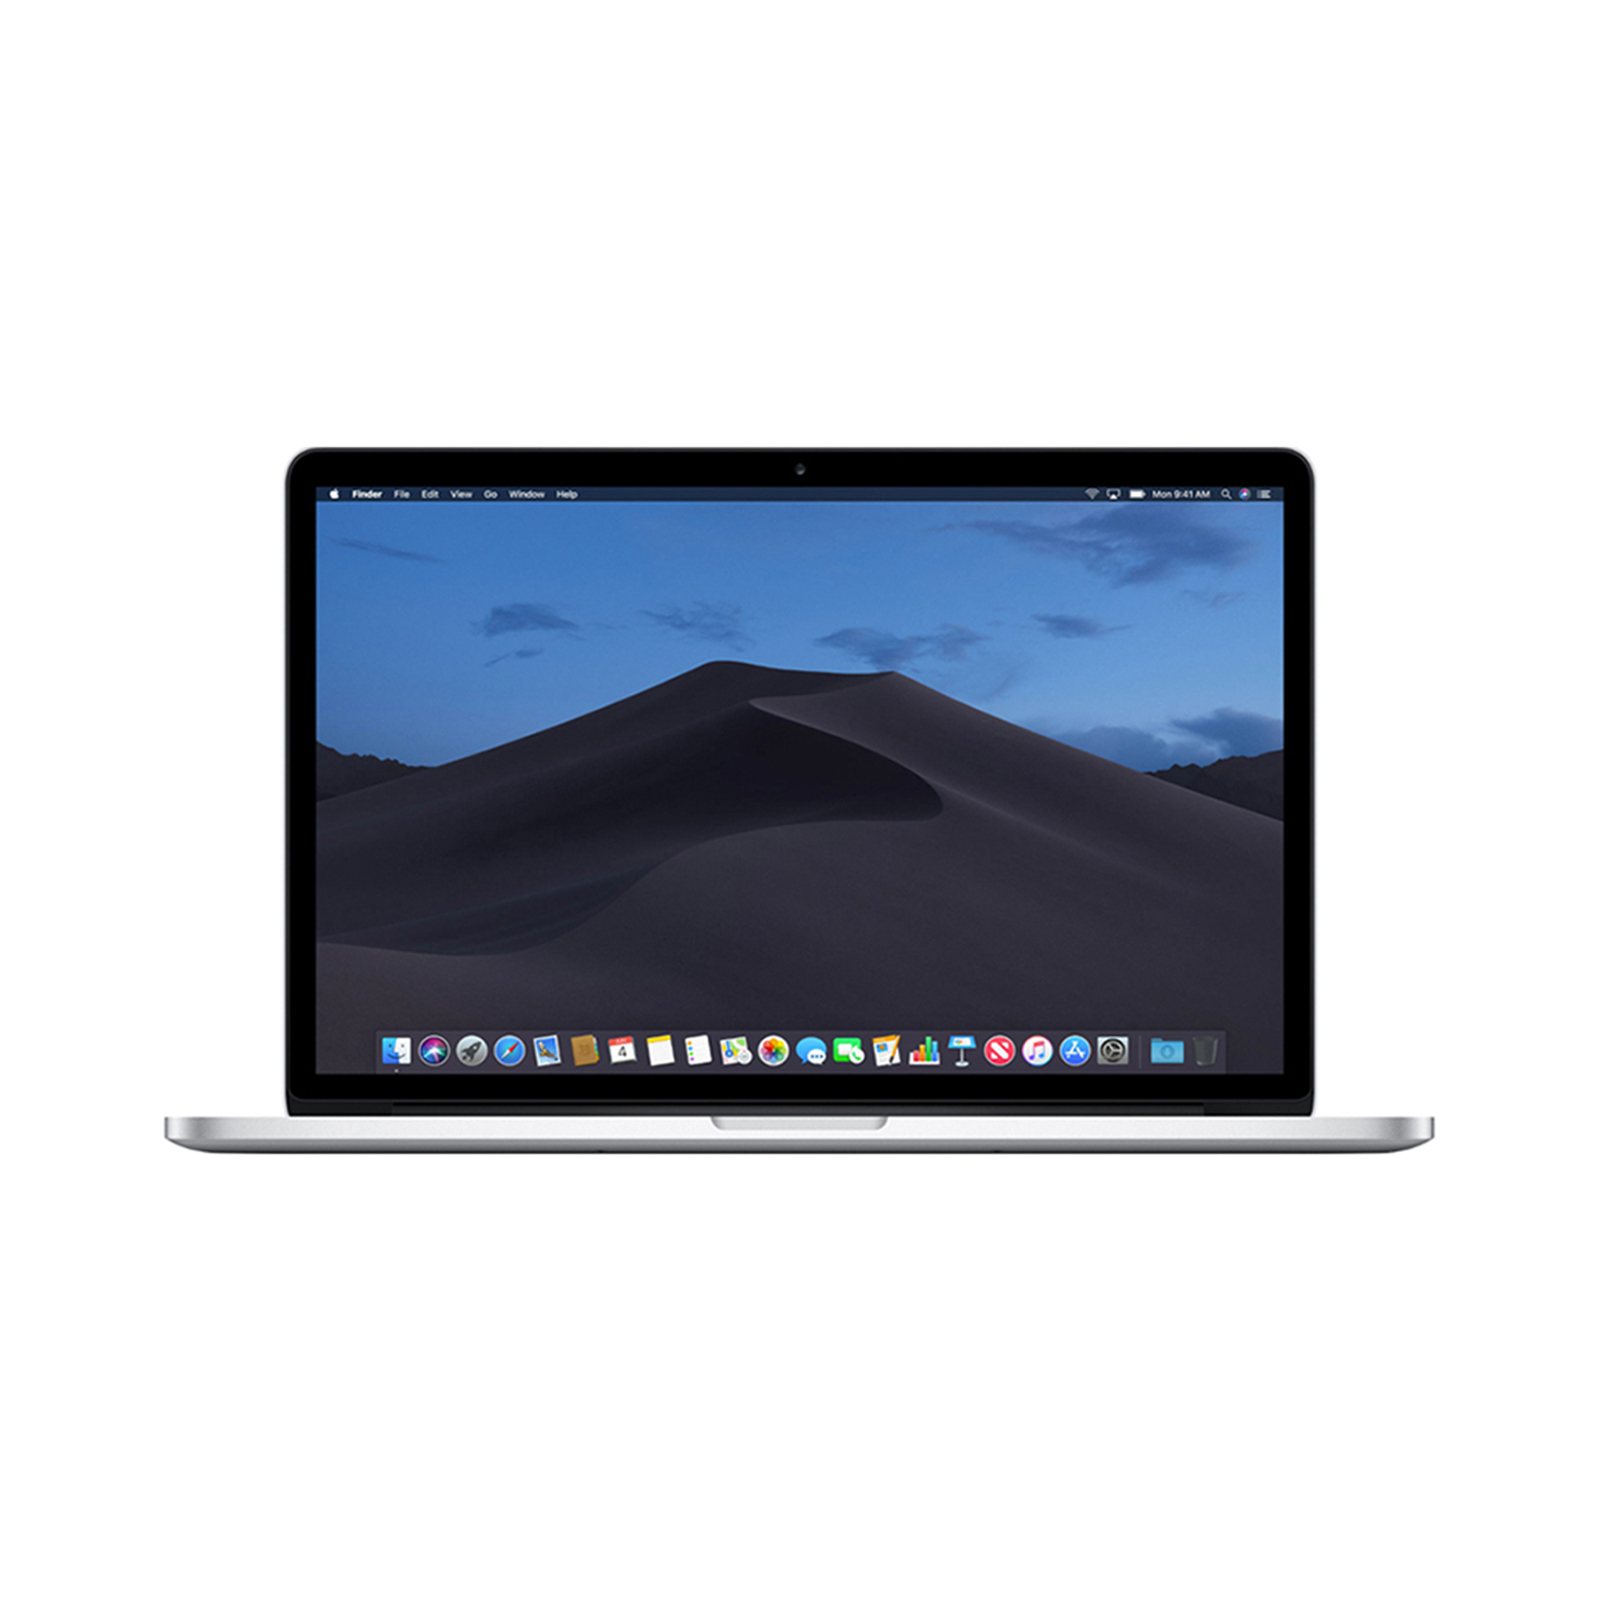 MacBook Pro (Retina, 13-inch, Early 2015) Intel Core i5 2.7 GHz 8GB 256GB